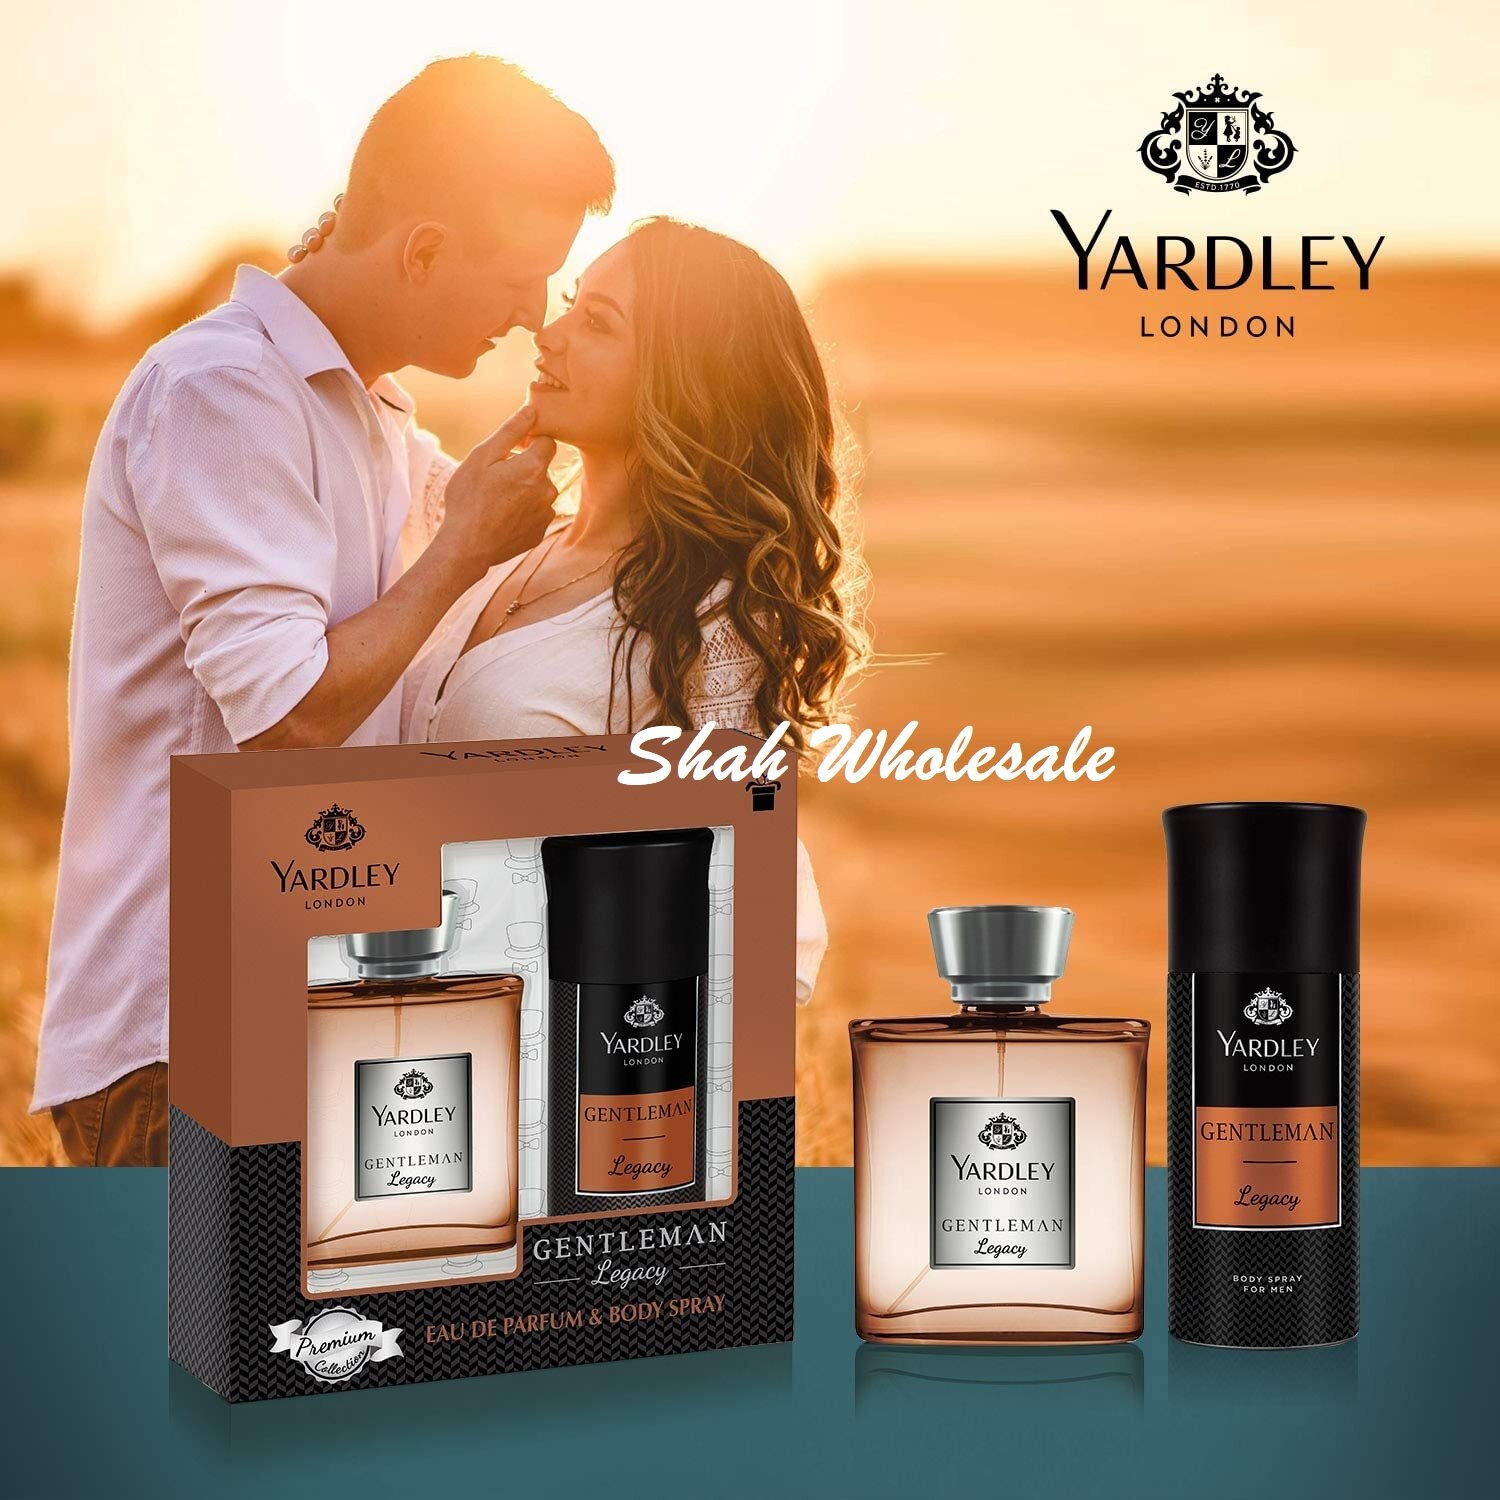 yardley legacy perfume